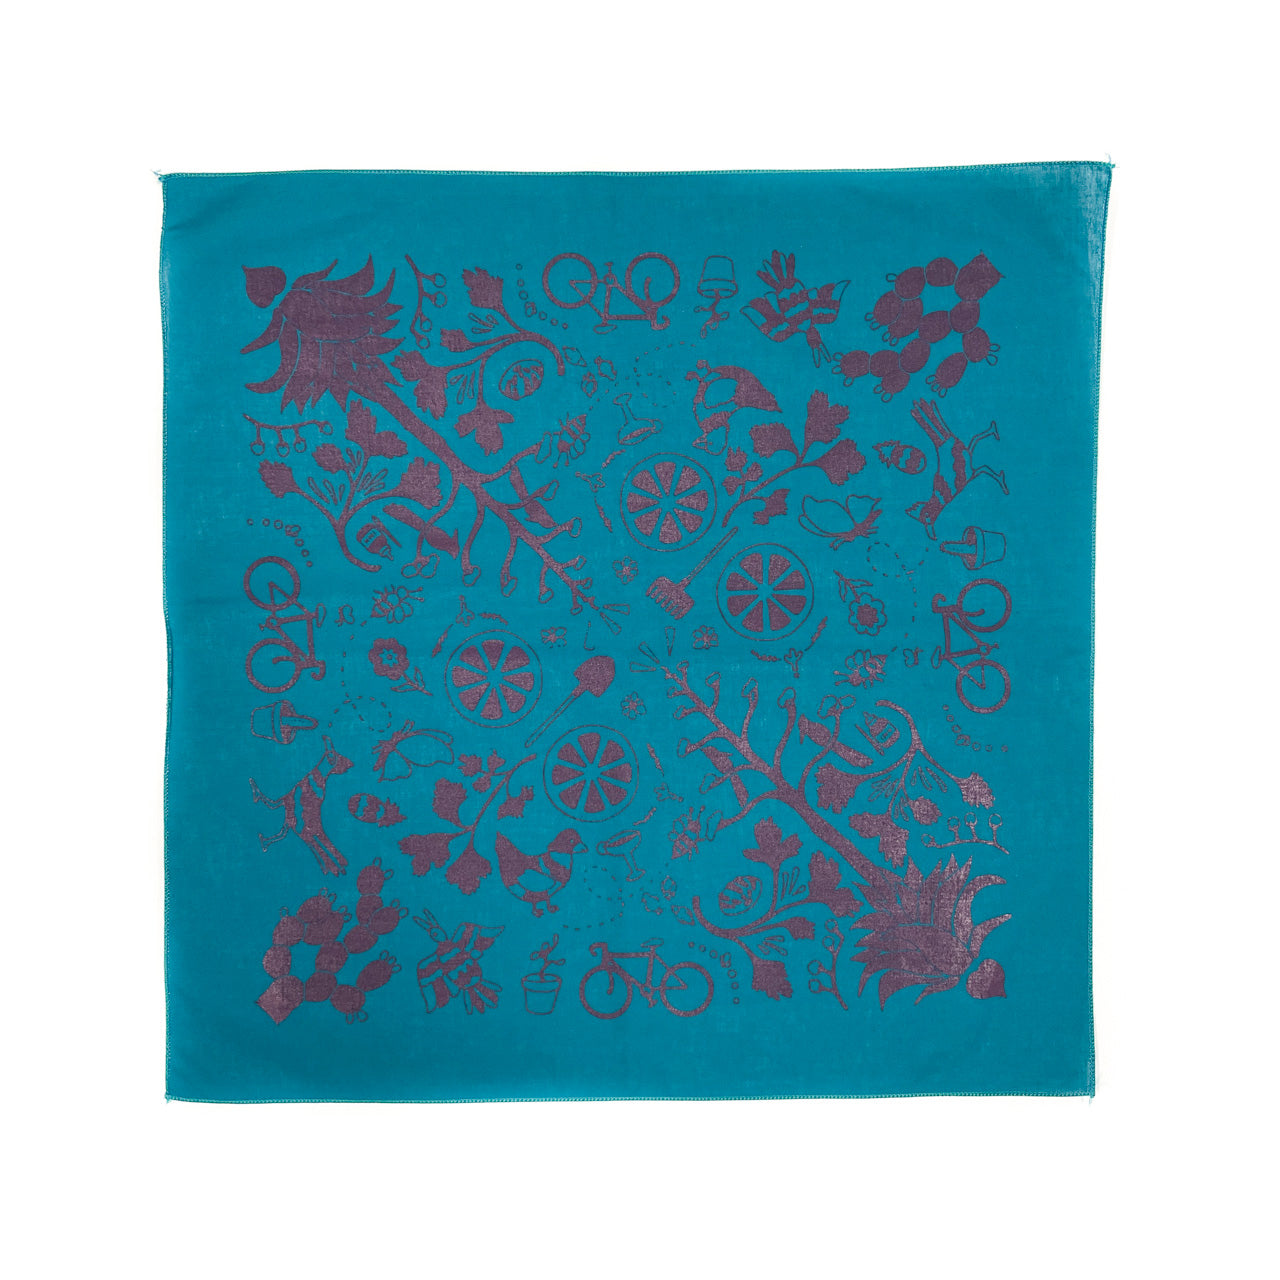 Hand Screen Printed 100% Cotton "AGAVE" Bandana - Purple on Teal